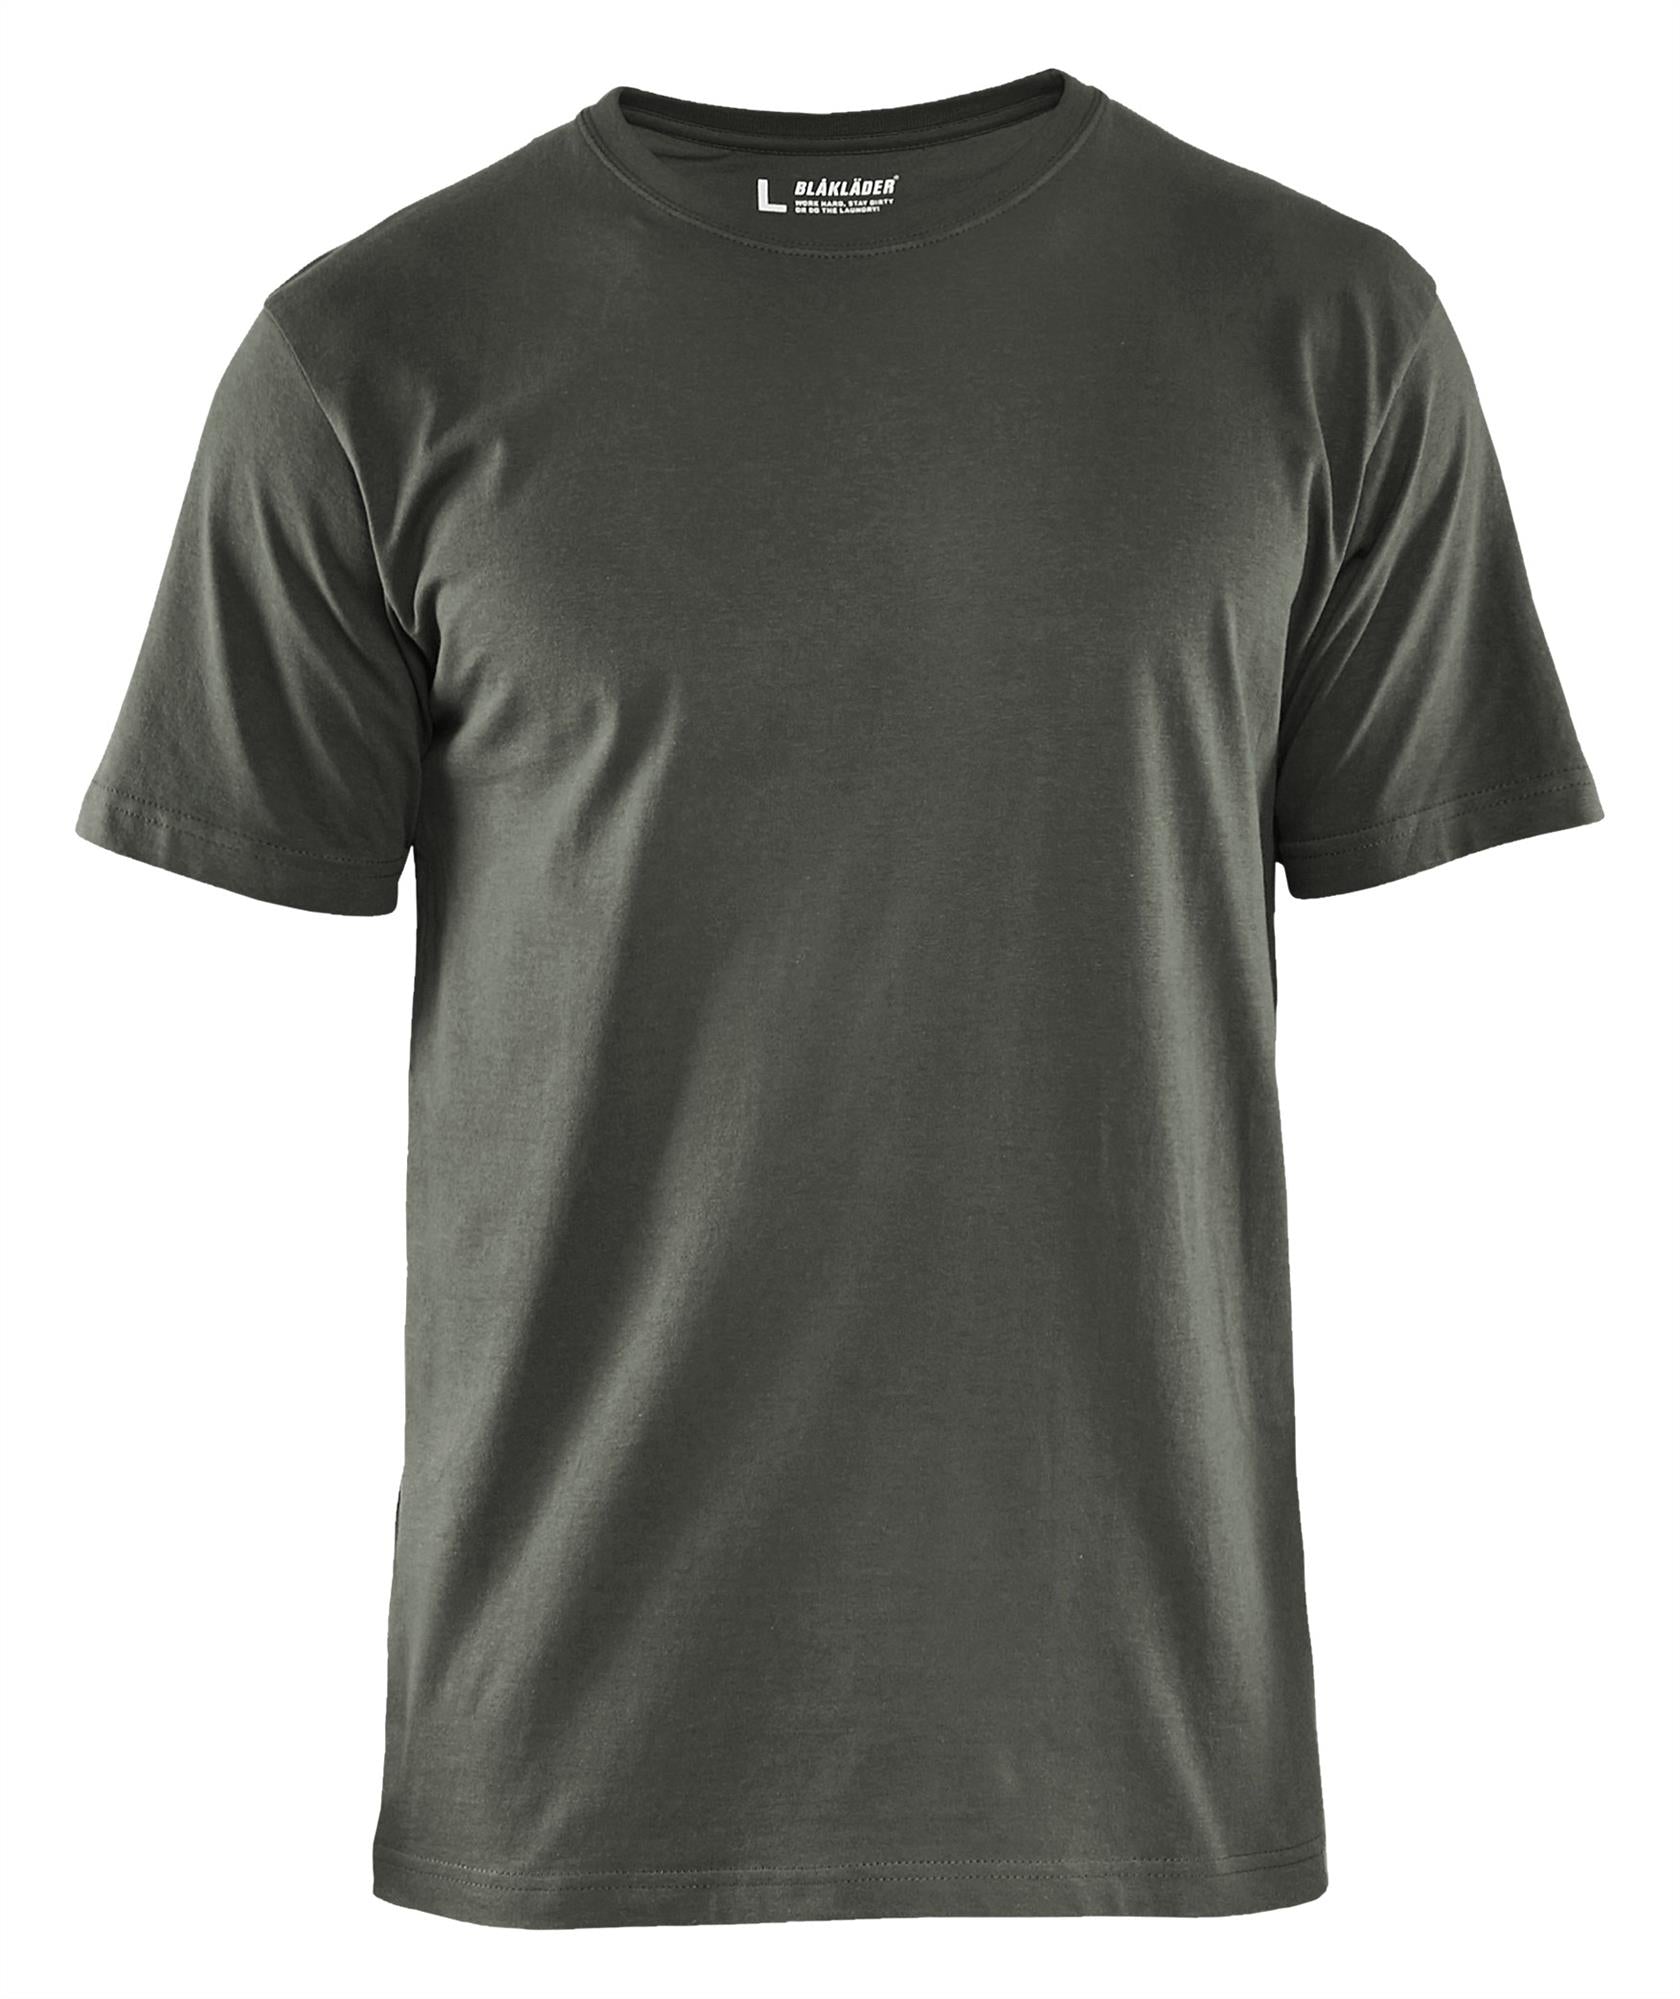 Blaklader army green men's cotton short-sleeve T-shirt #3525